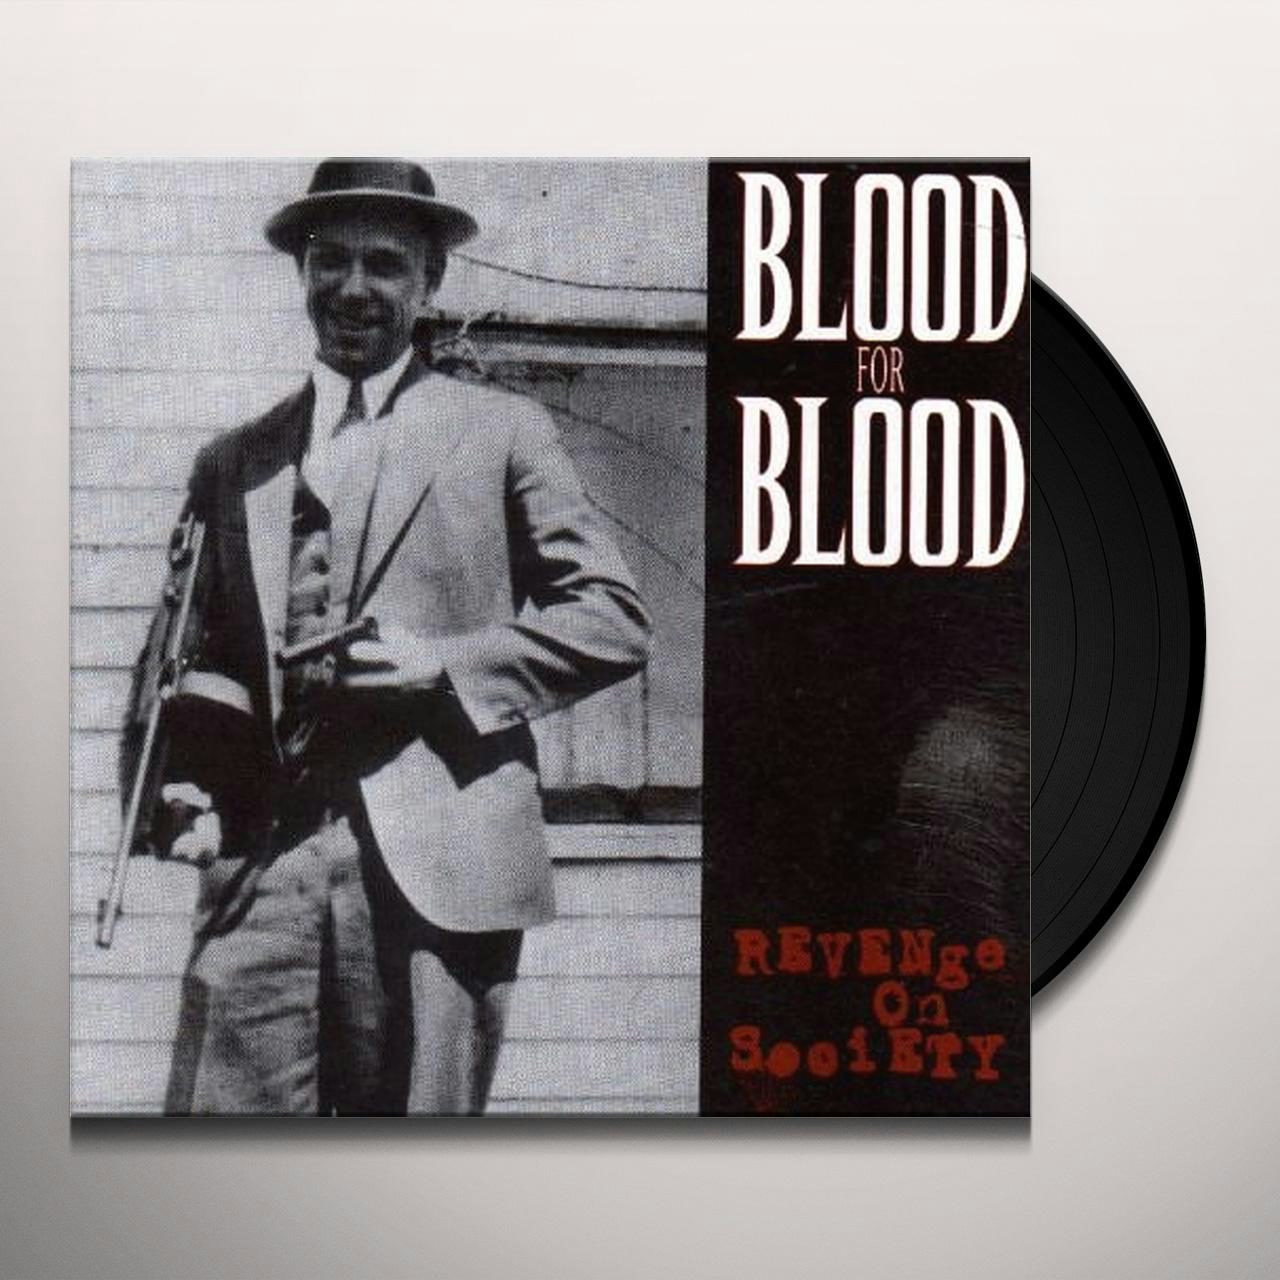 Blood For Blood – Revenge On Society  LP